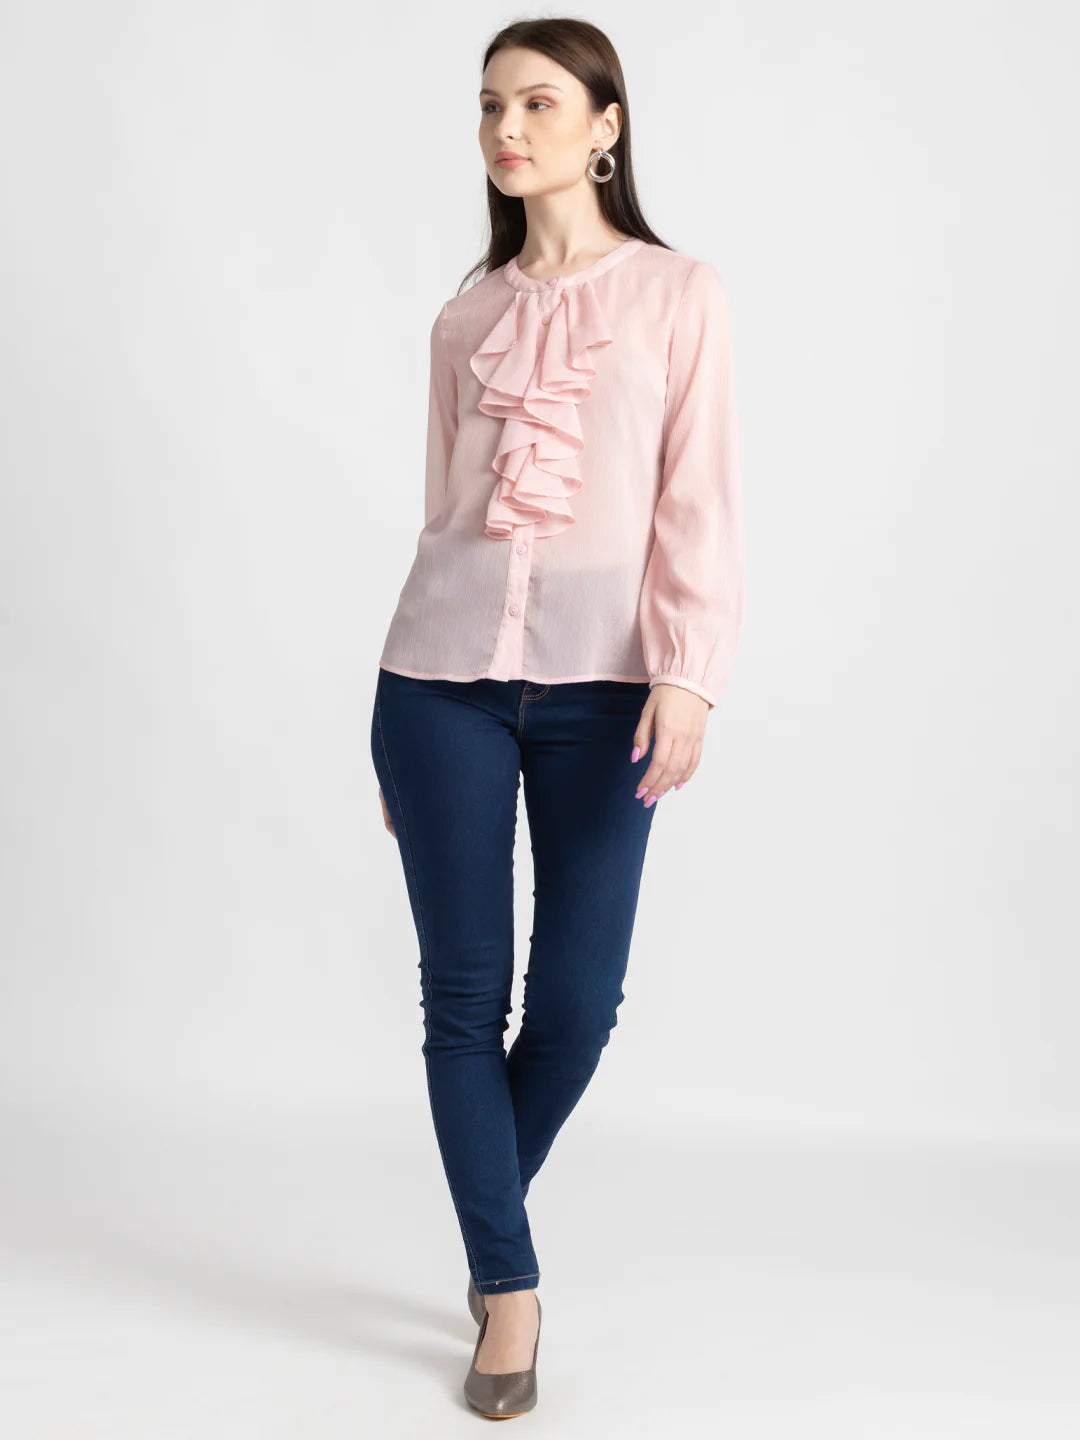 Pink Long Sleeve Party Shirt | Pink Elegance Long Sleeve Party Shirt